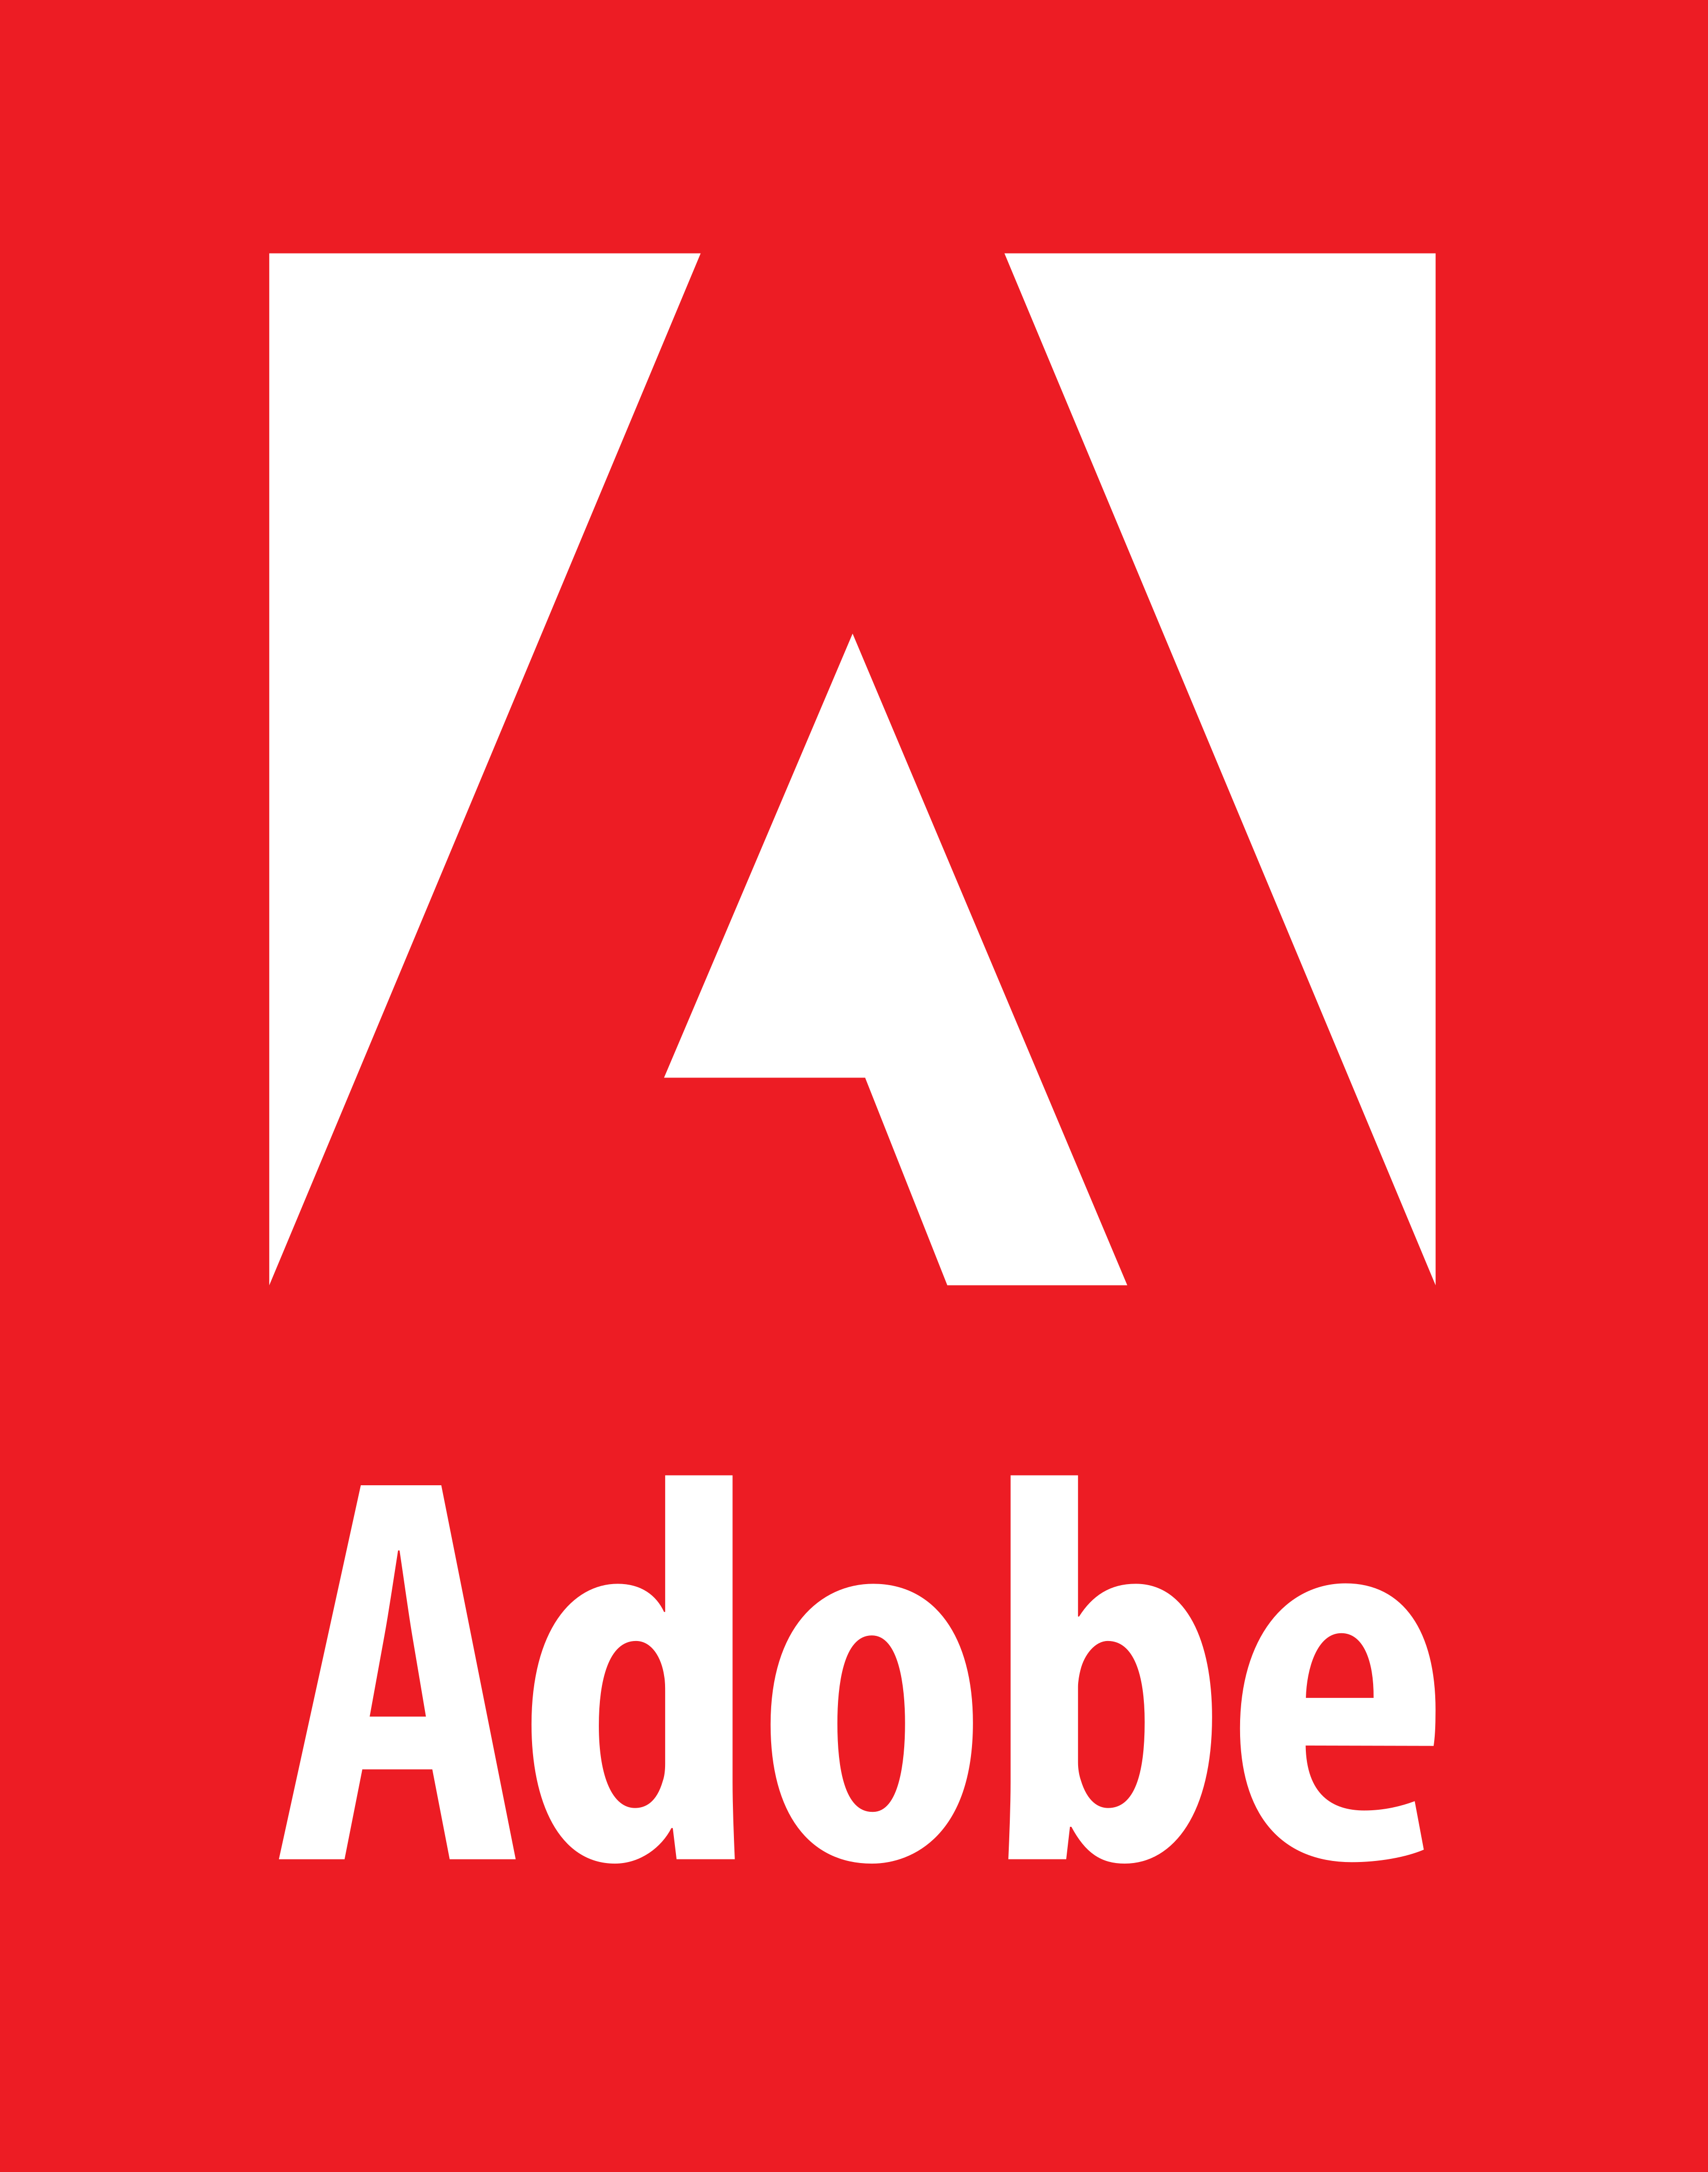 Logo pinterest and. Adobe clipart logos